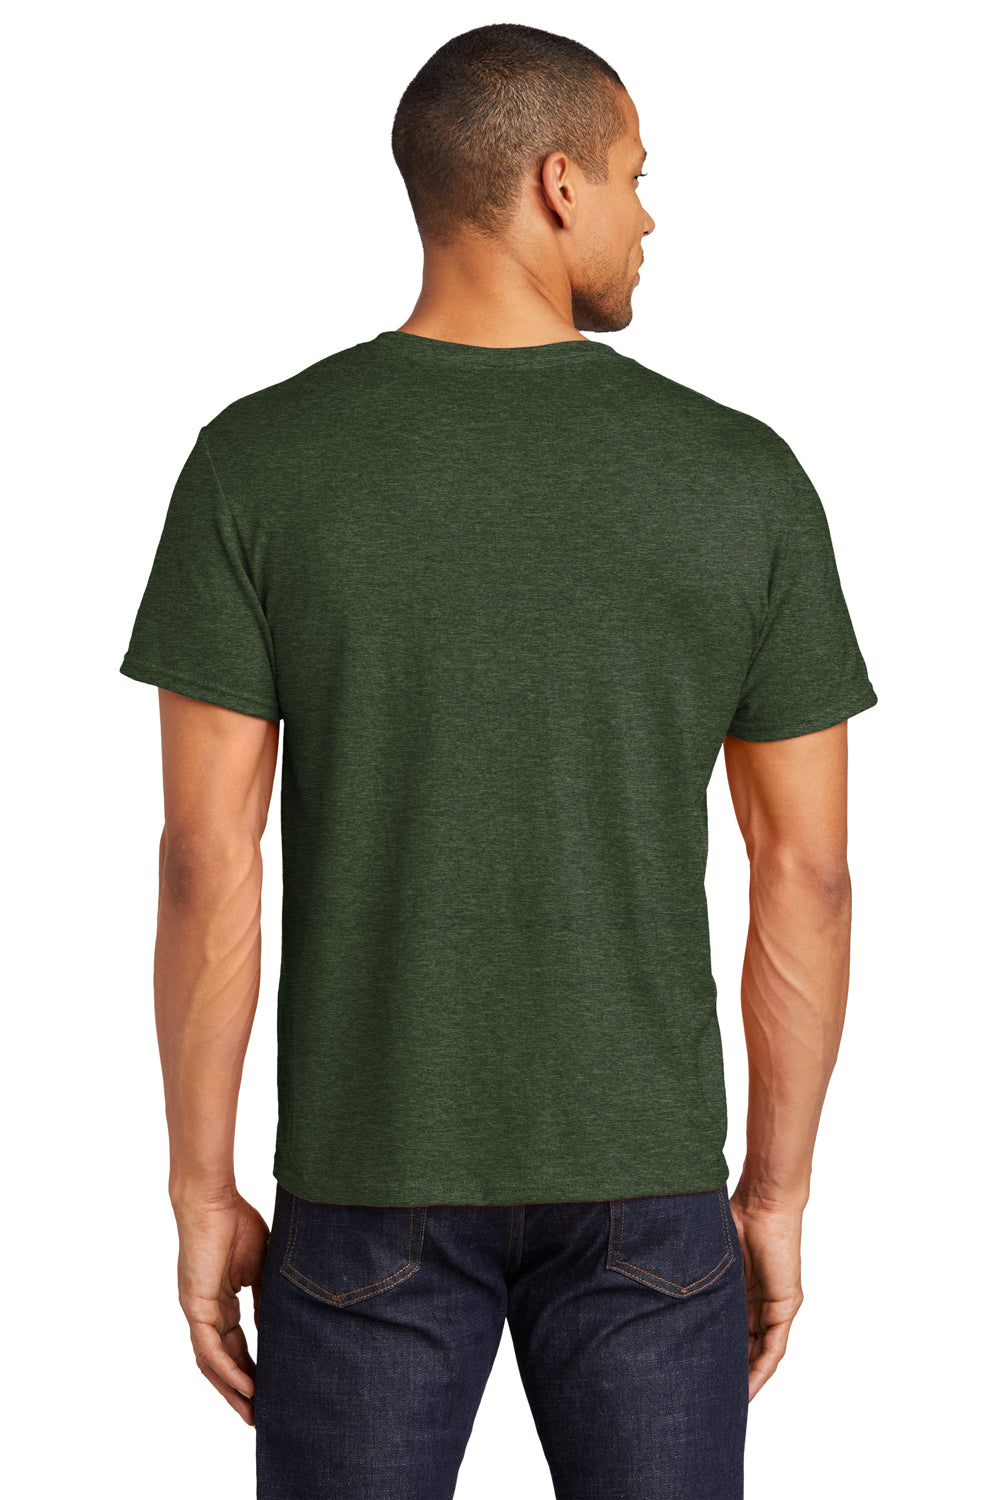 Jerzees 560M Mens Premium Blend Ring Spun Short Sleeve Crewneck T-Shirt Heather Military Green Back